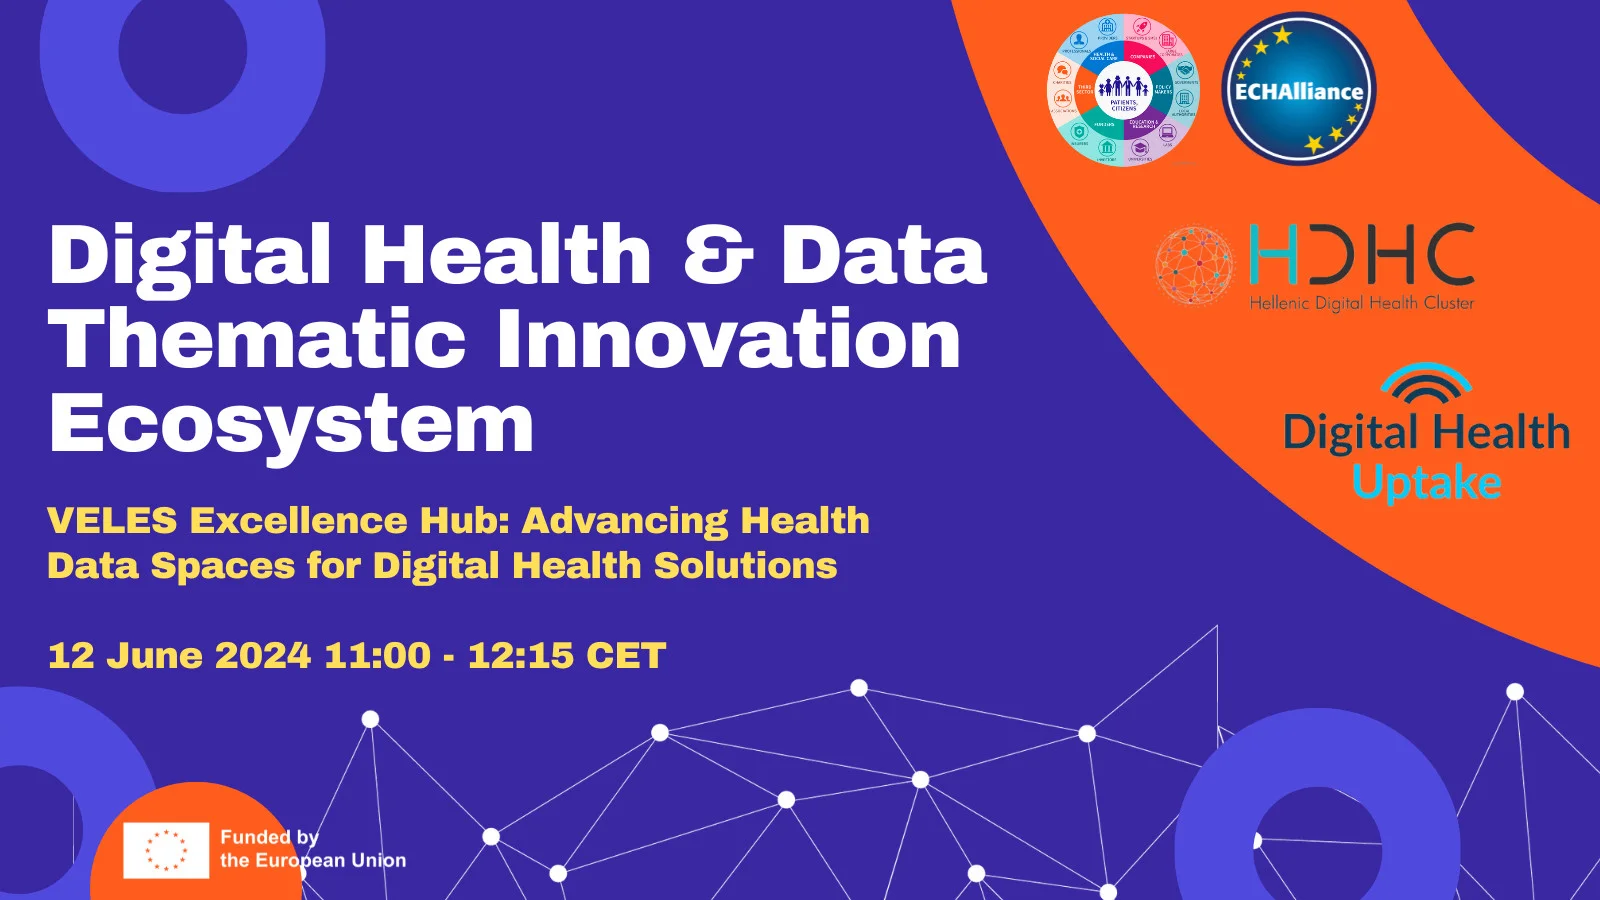 Digital Health & Data Thematic Innovation Ecosystem 12 June 2024 11:00 - 12:15